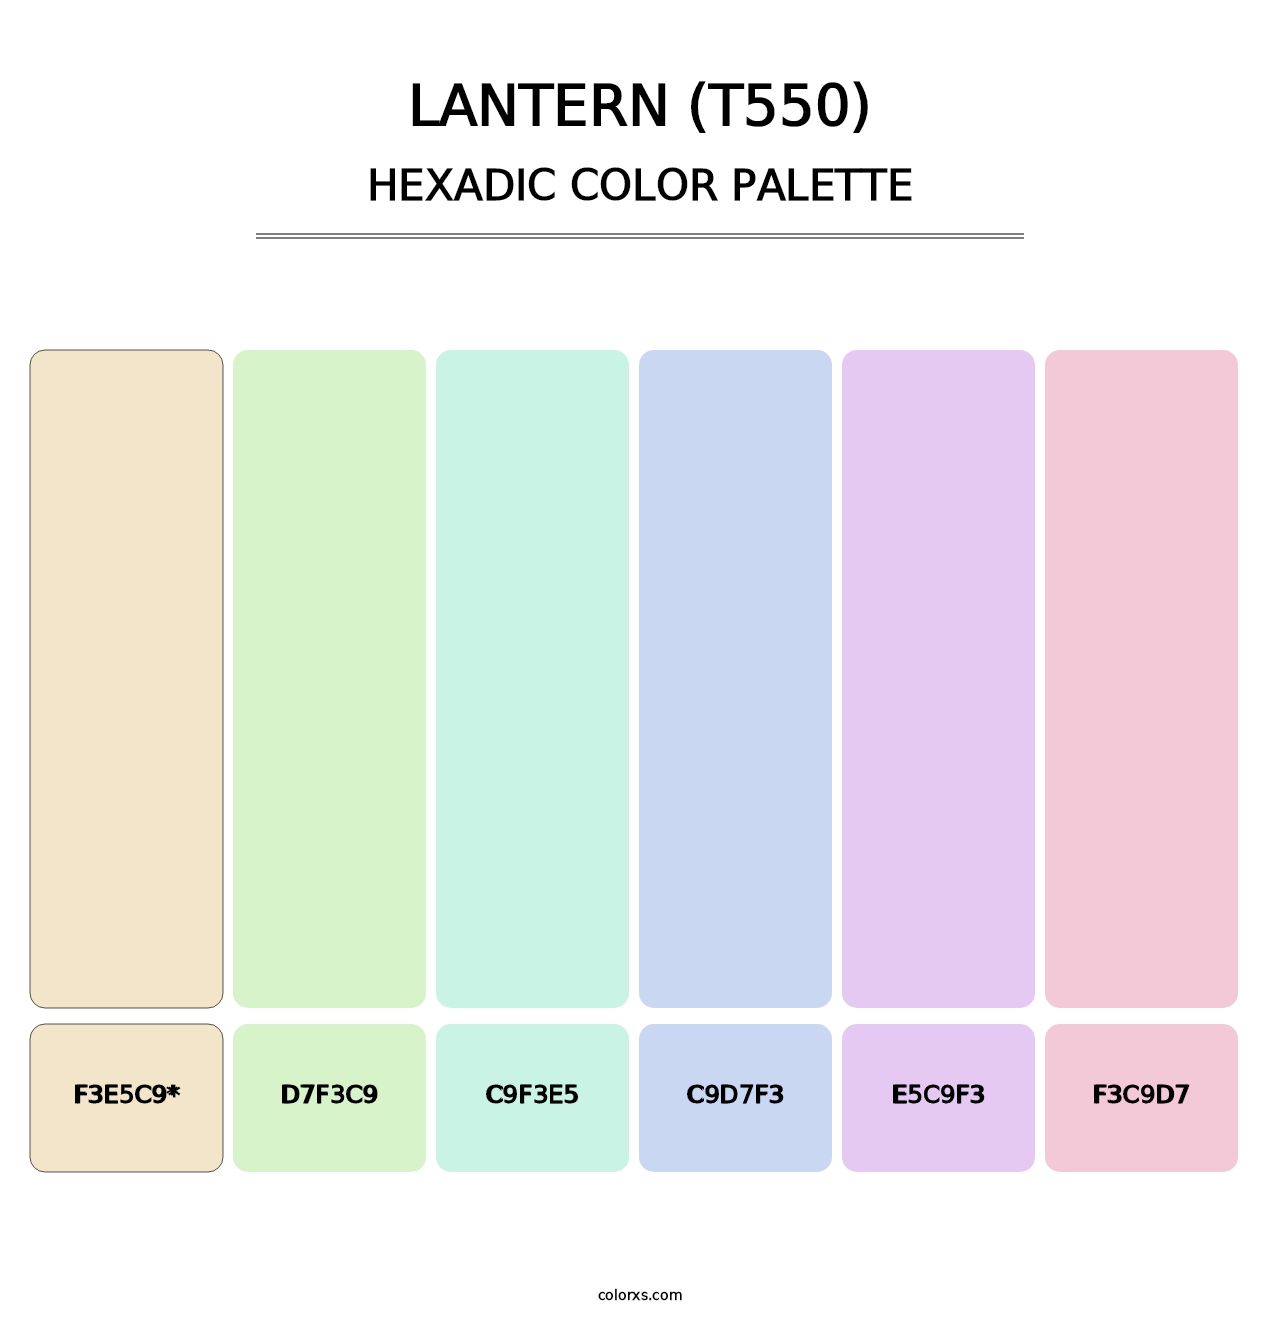 Lantern (T550) - Hexadic Color Palette